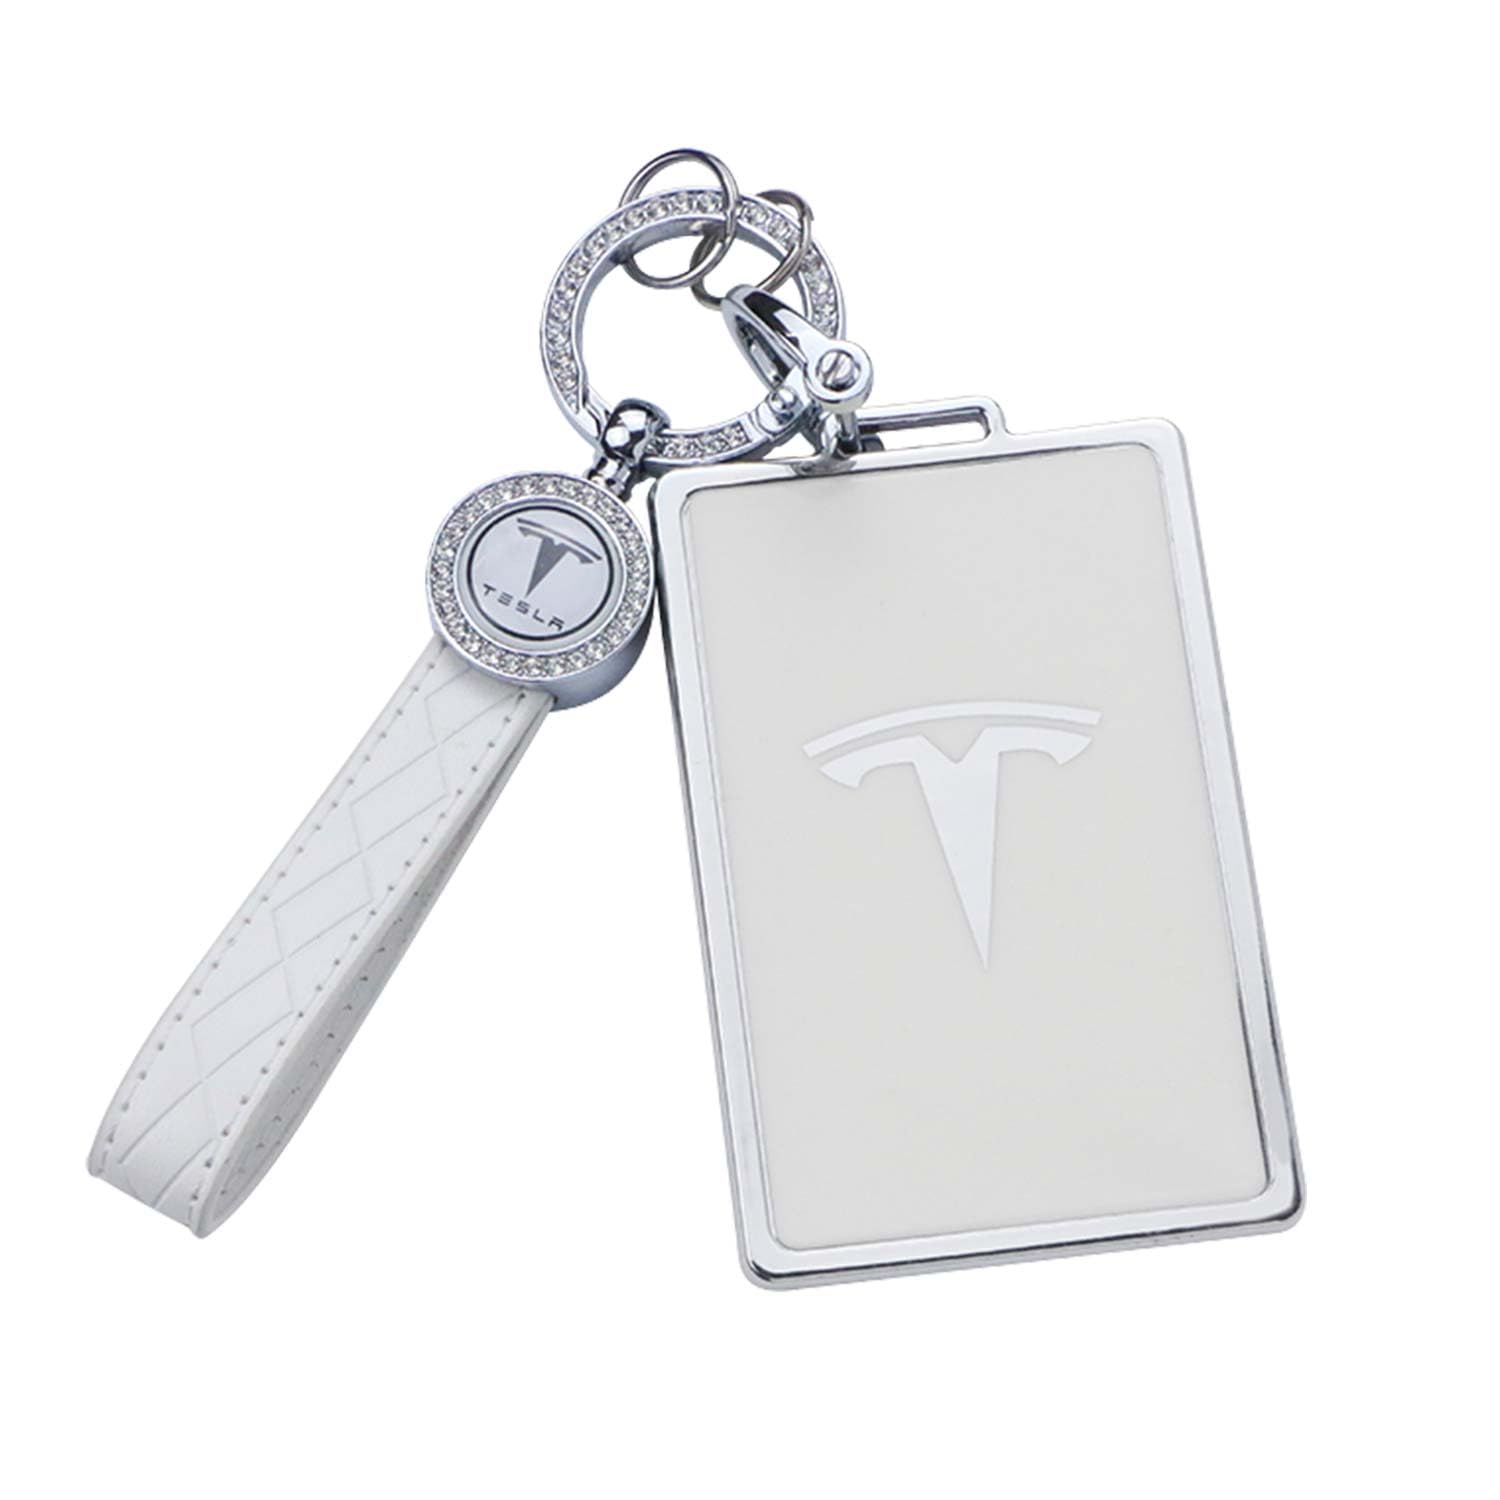 RCBDCYGJ Autoschlüssel Hülle Cover Passt für Tesla Schlüsselhülle Abdeckung Model 3 Model Y Schlüsselkartenhalter Silikon Schutzhülle Schlüsselanhänger von RCBDCYGJ